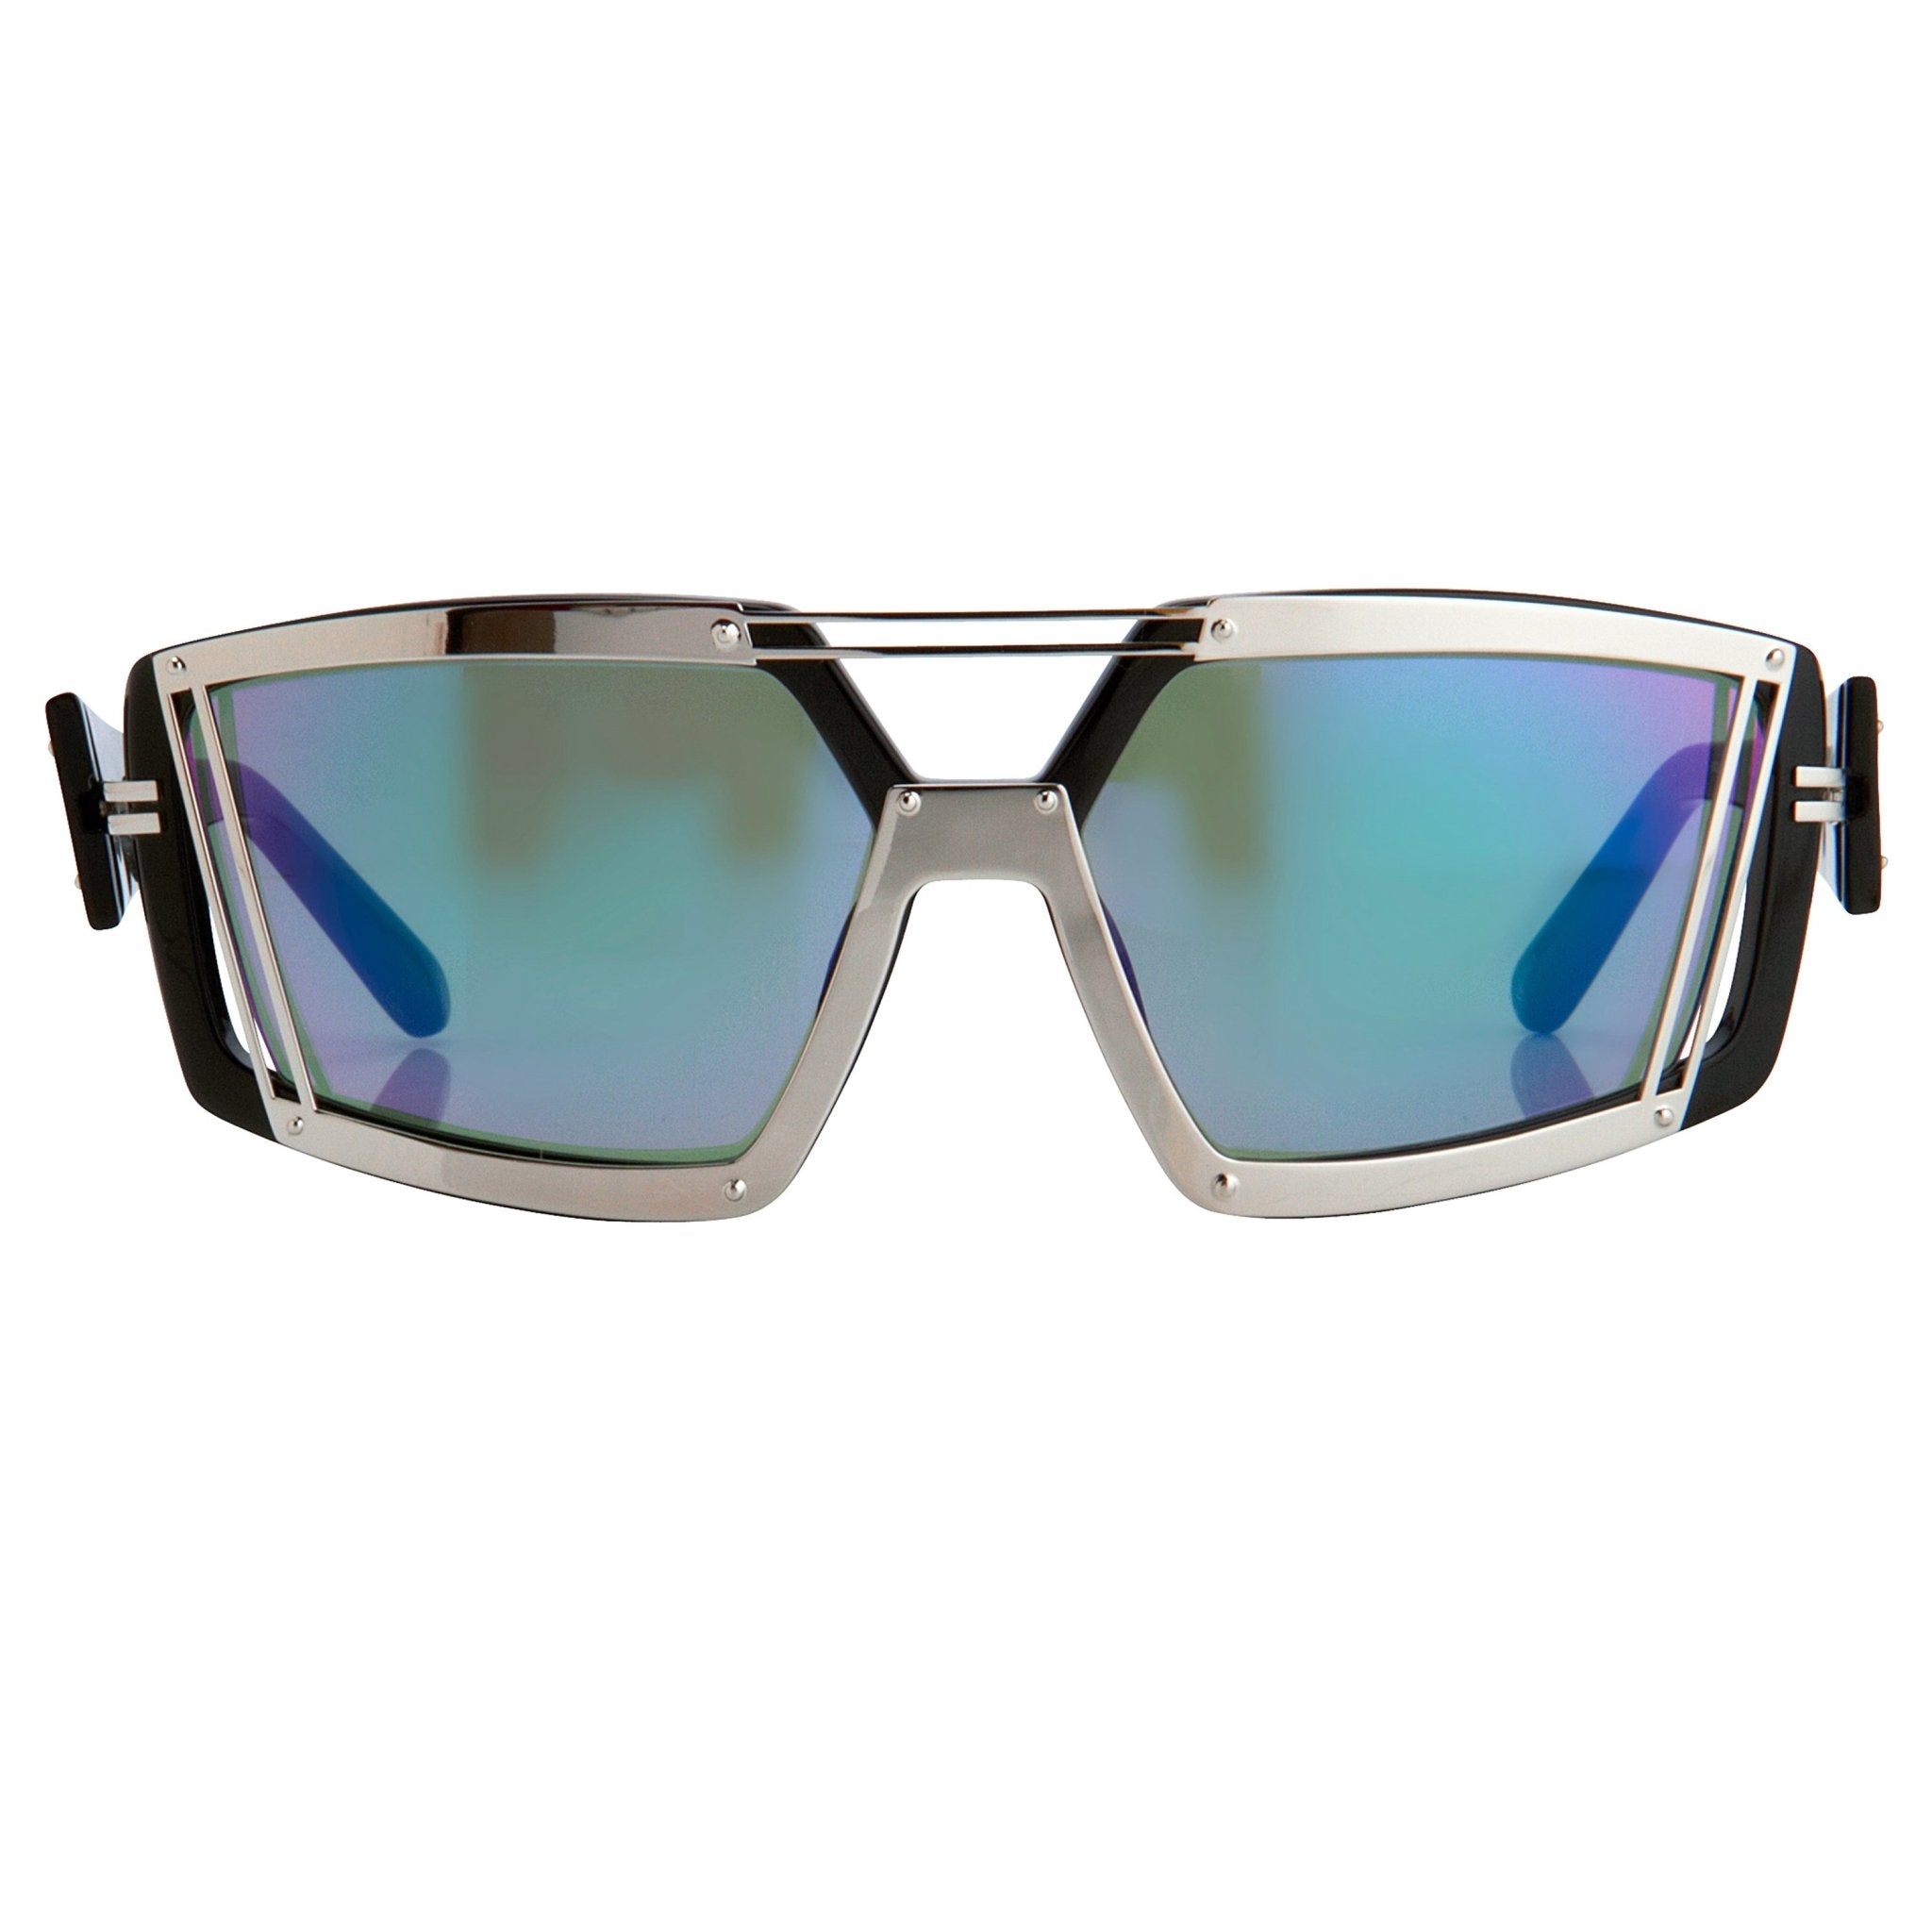 Prabal Gurung Sunglasses Rectangular Black Bar With Green/Purple Mirror Lenses PG3C4SUN - Watches & Crystals